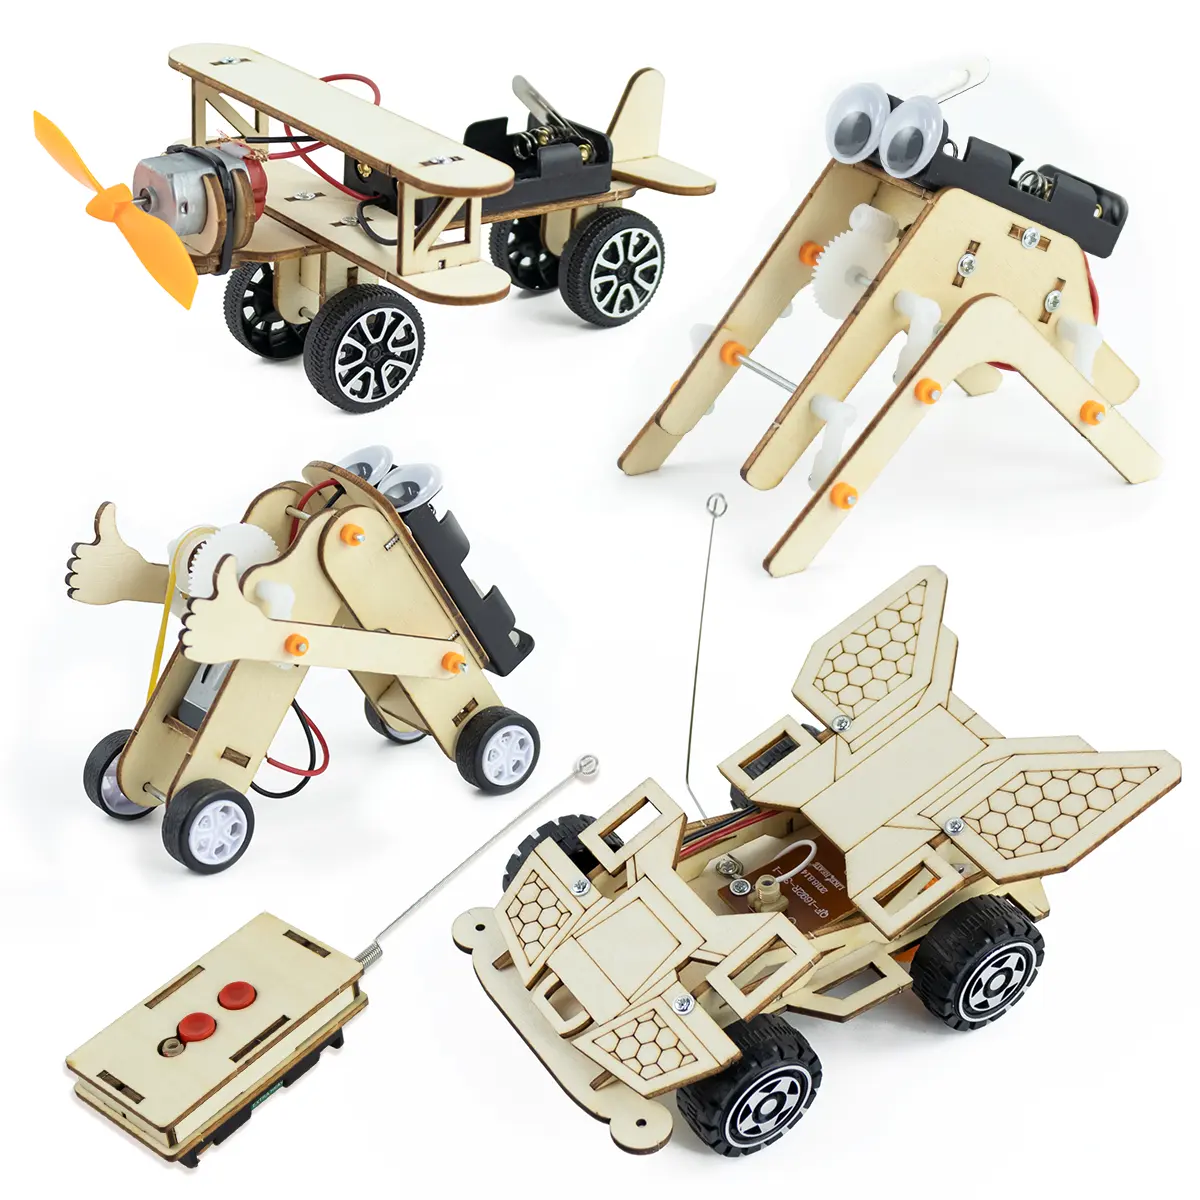 DIY Wooden Model Toys STEM Porject Kit 3D Puzzles Science Experiments Educational Building kit for Kids educational toys